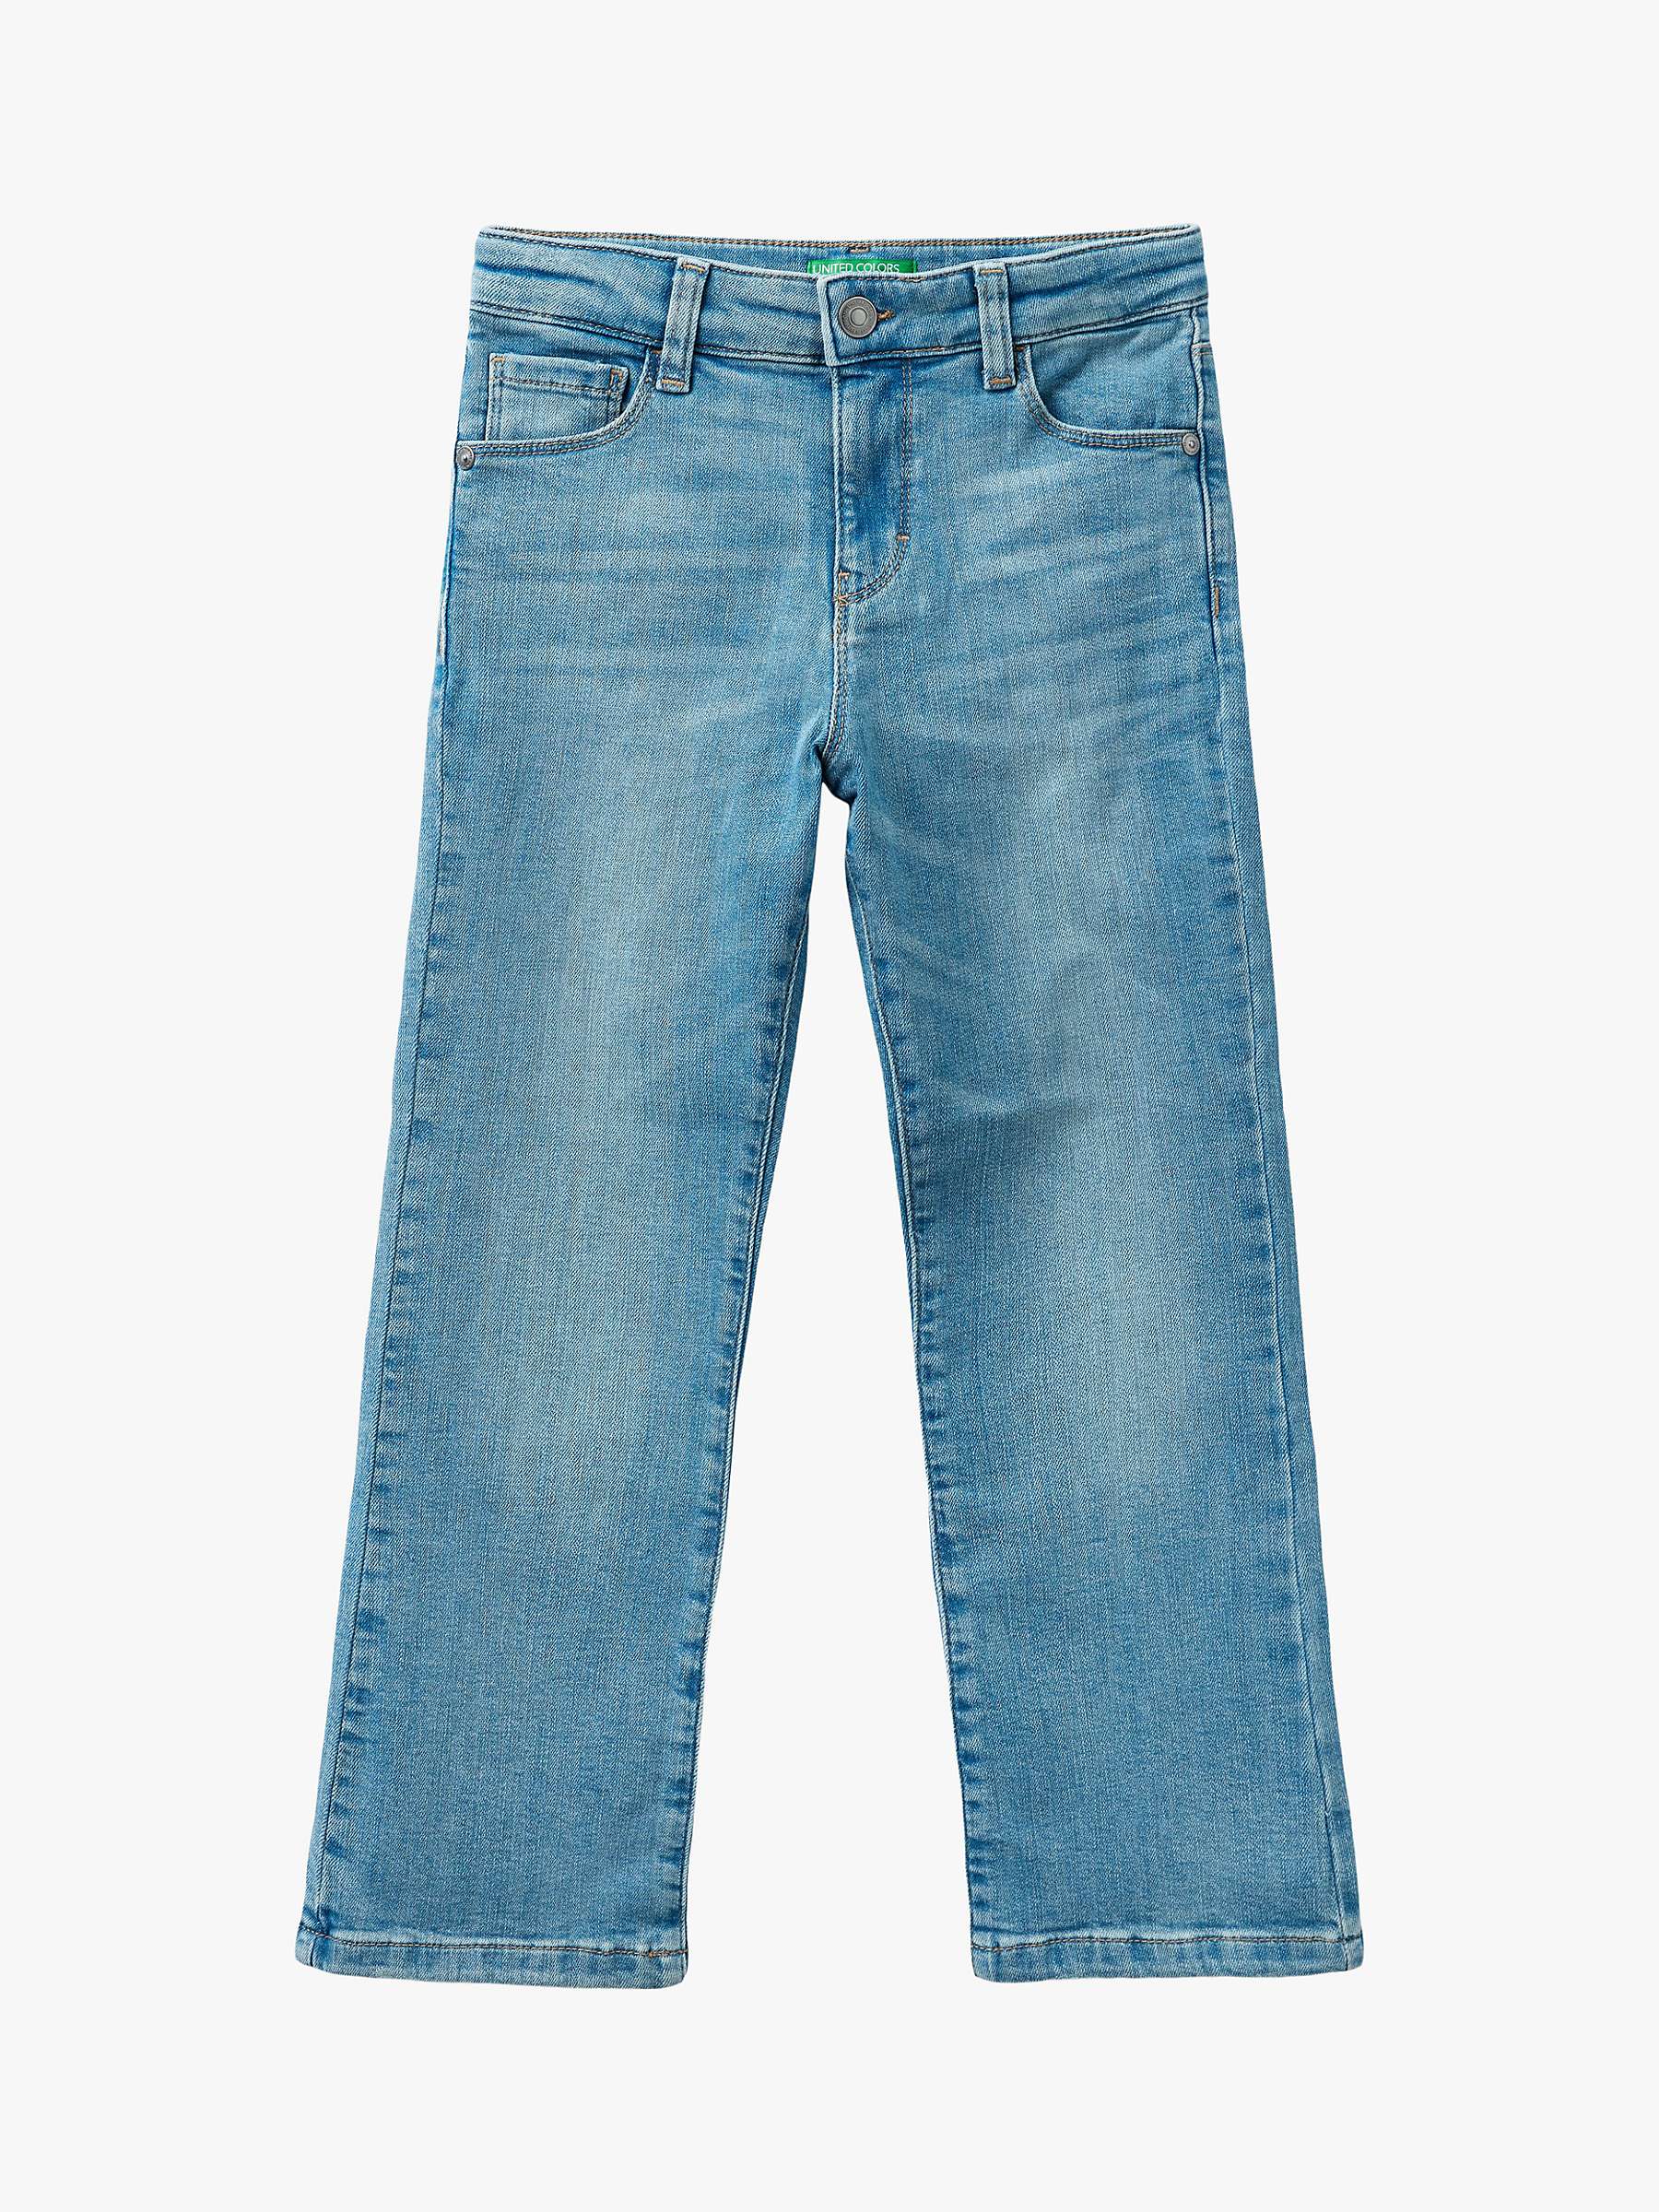 Buy Benetton Kids' Stretch Jeans, Blue Online at johnlewis.com